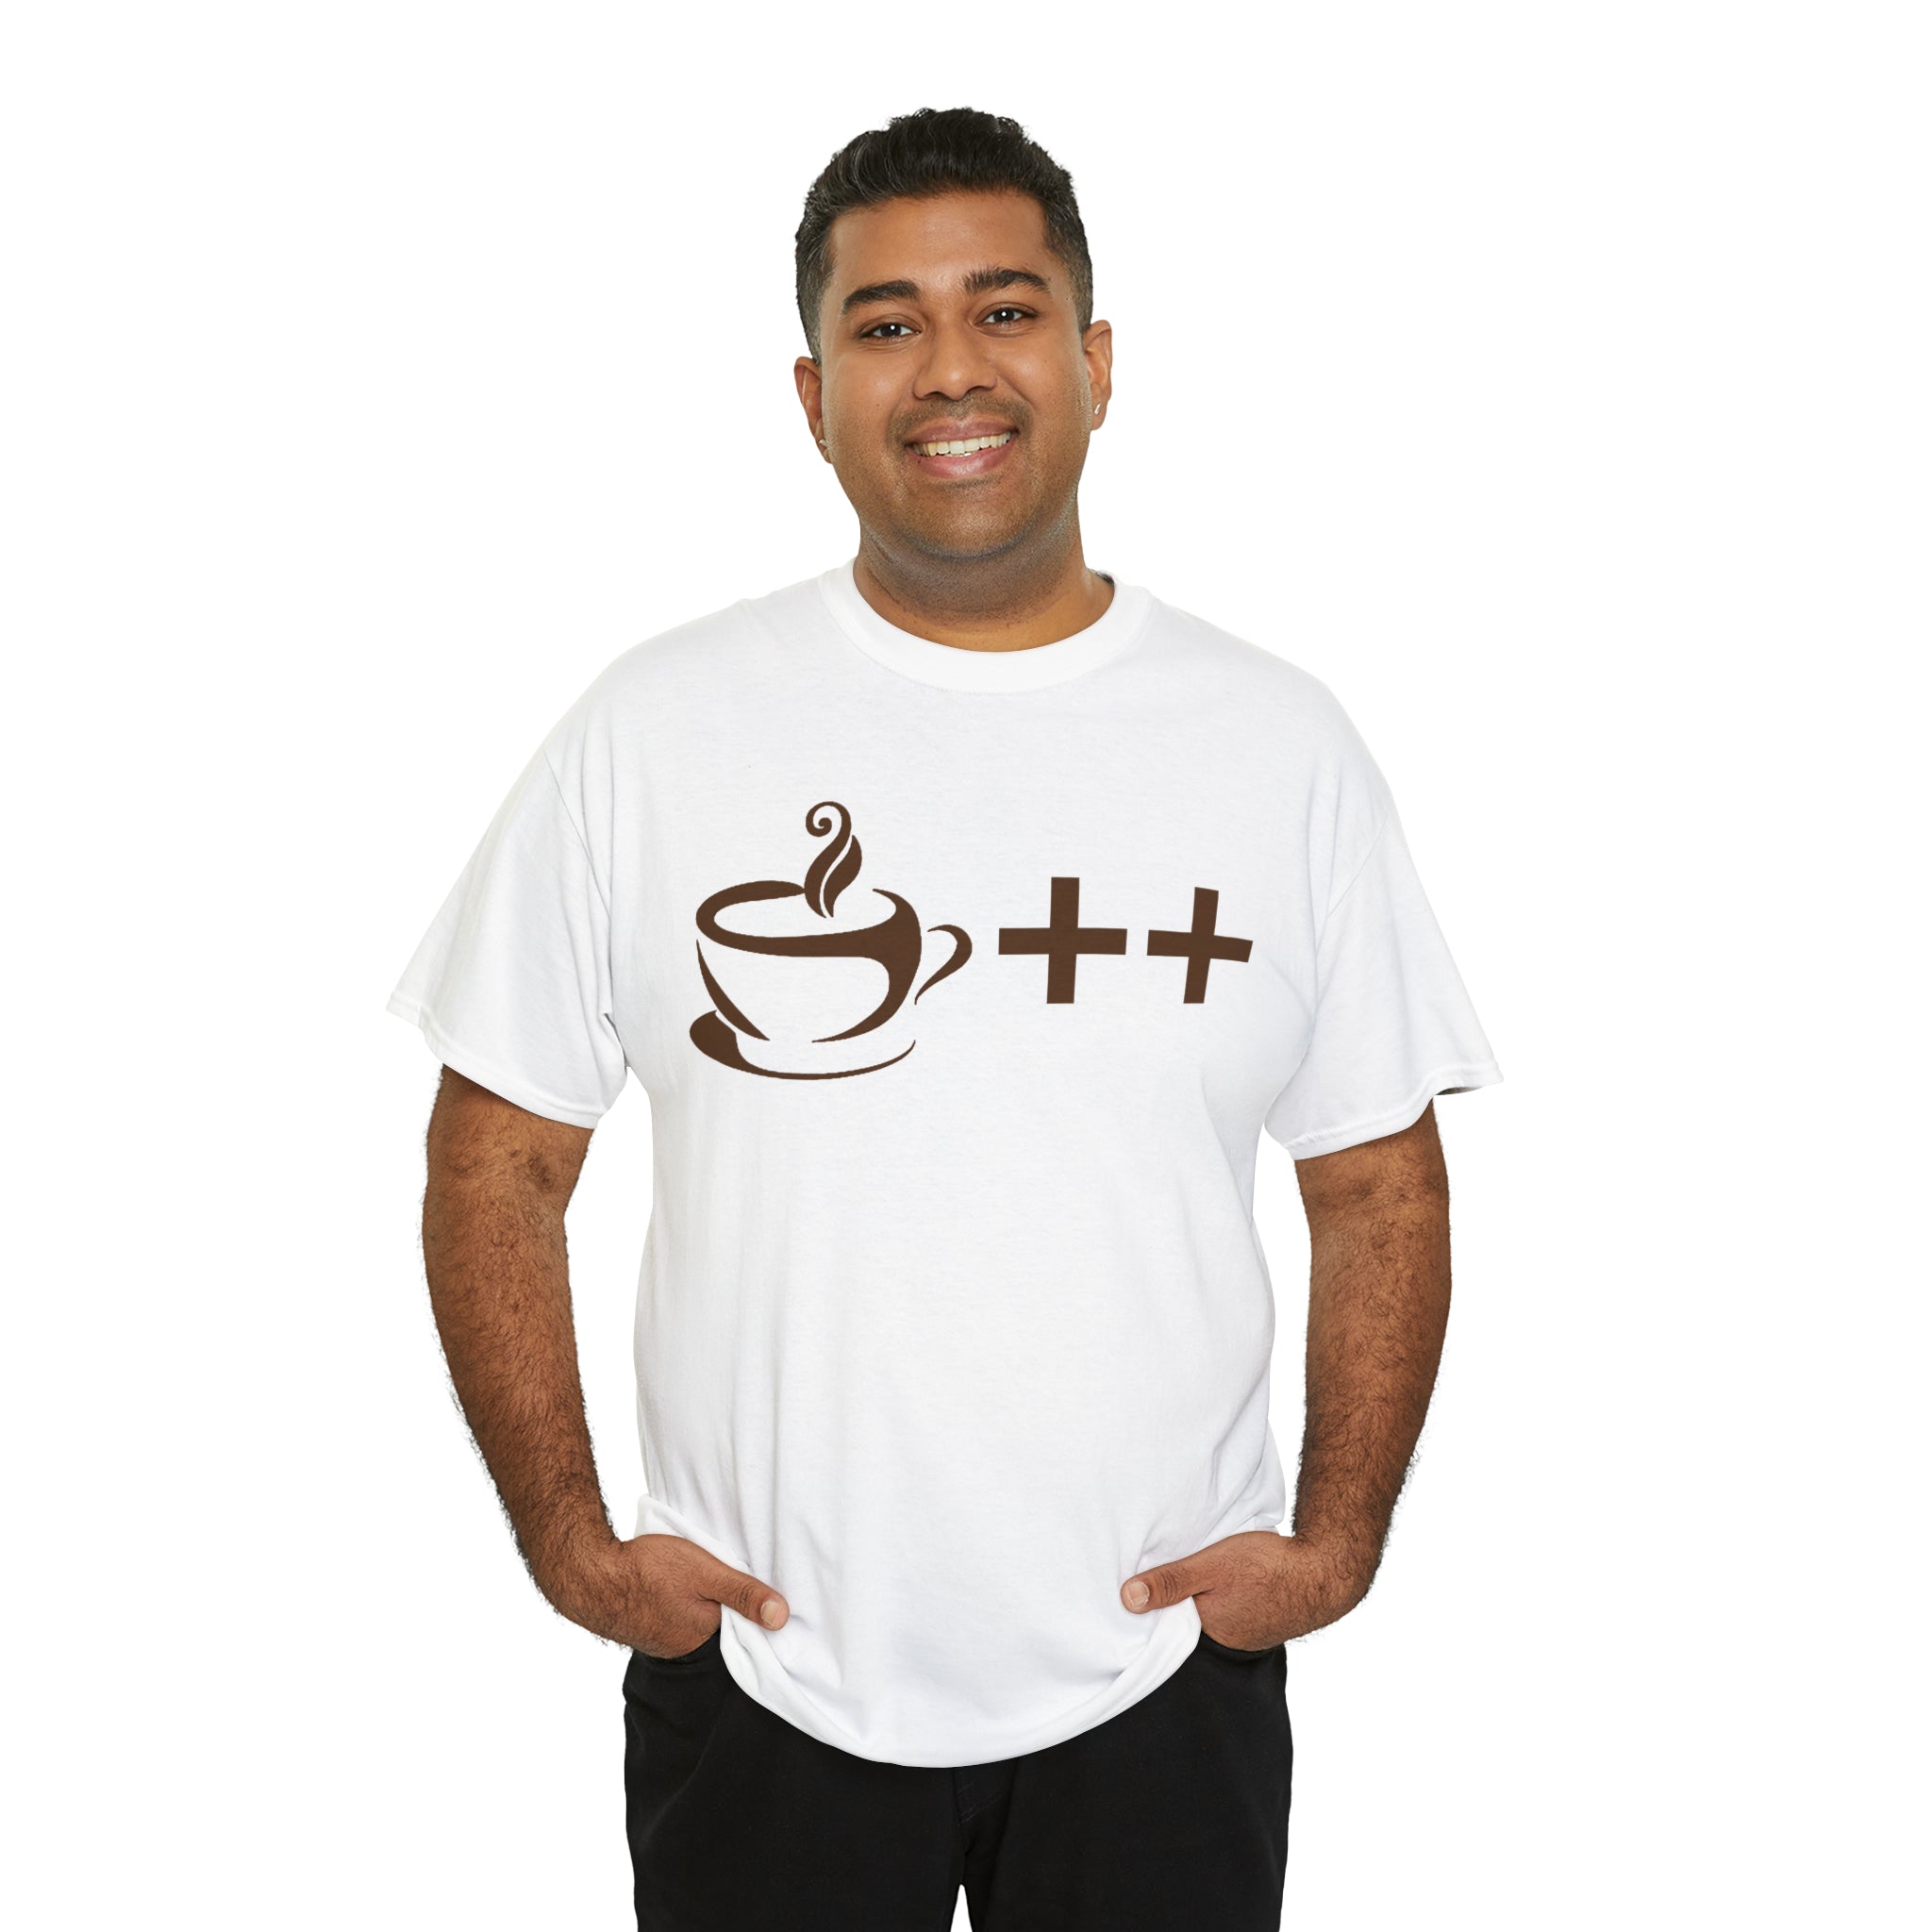 Chai ++ T-Shirt Design by C&C